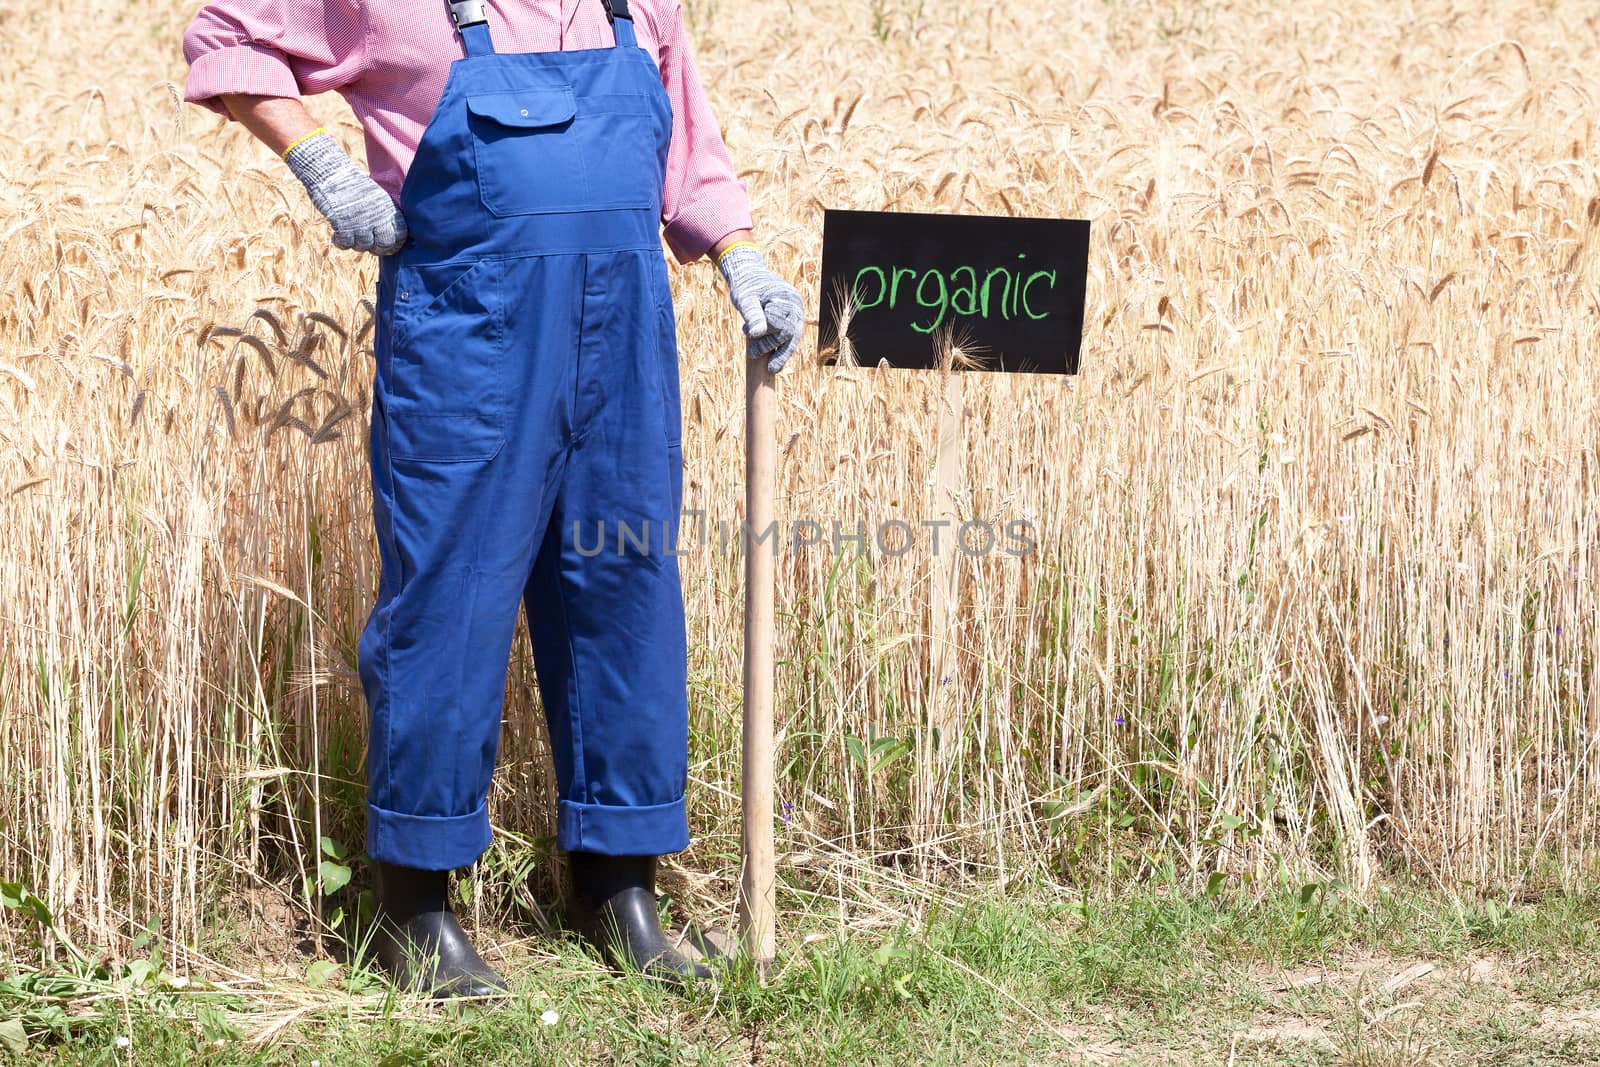 Organic wheat field by wellphoto